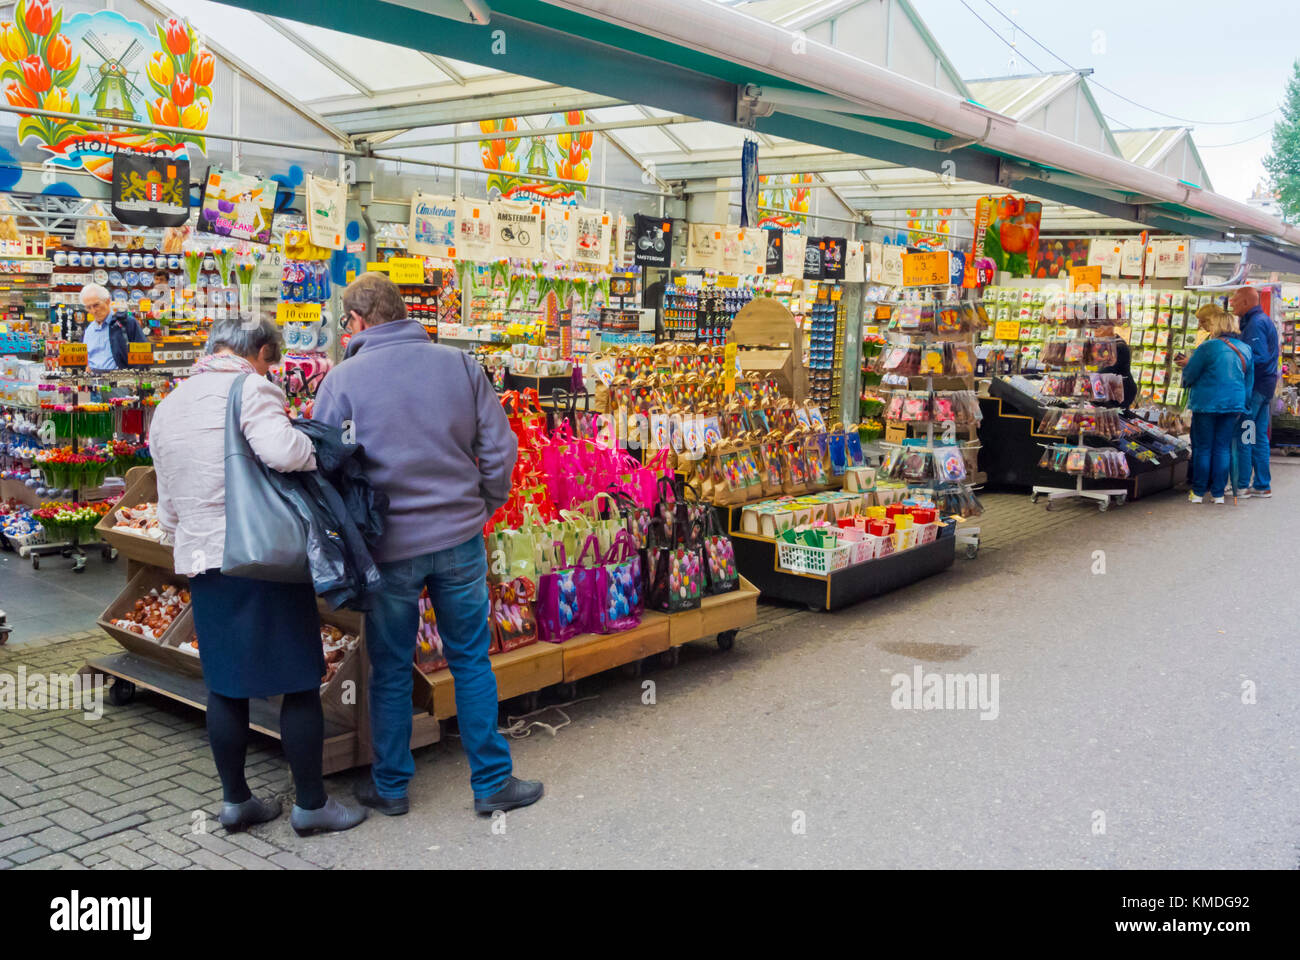 Singel flower market, Amsterdam, The Netherlands Stock Photo